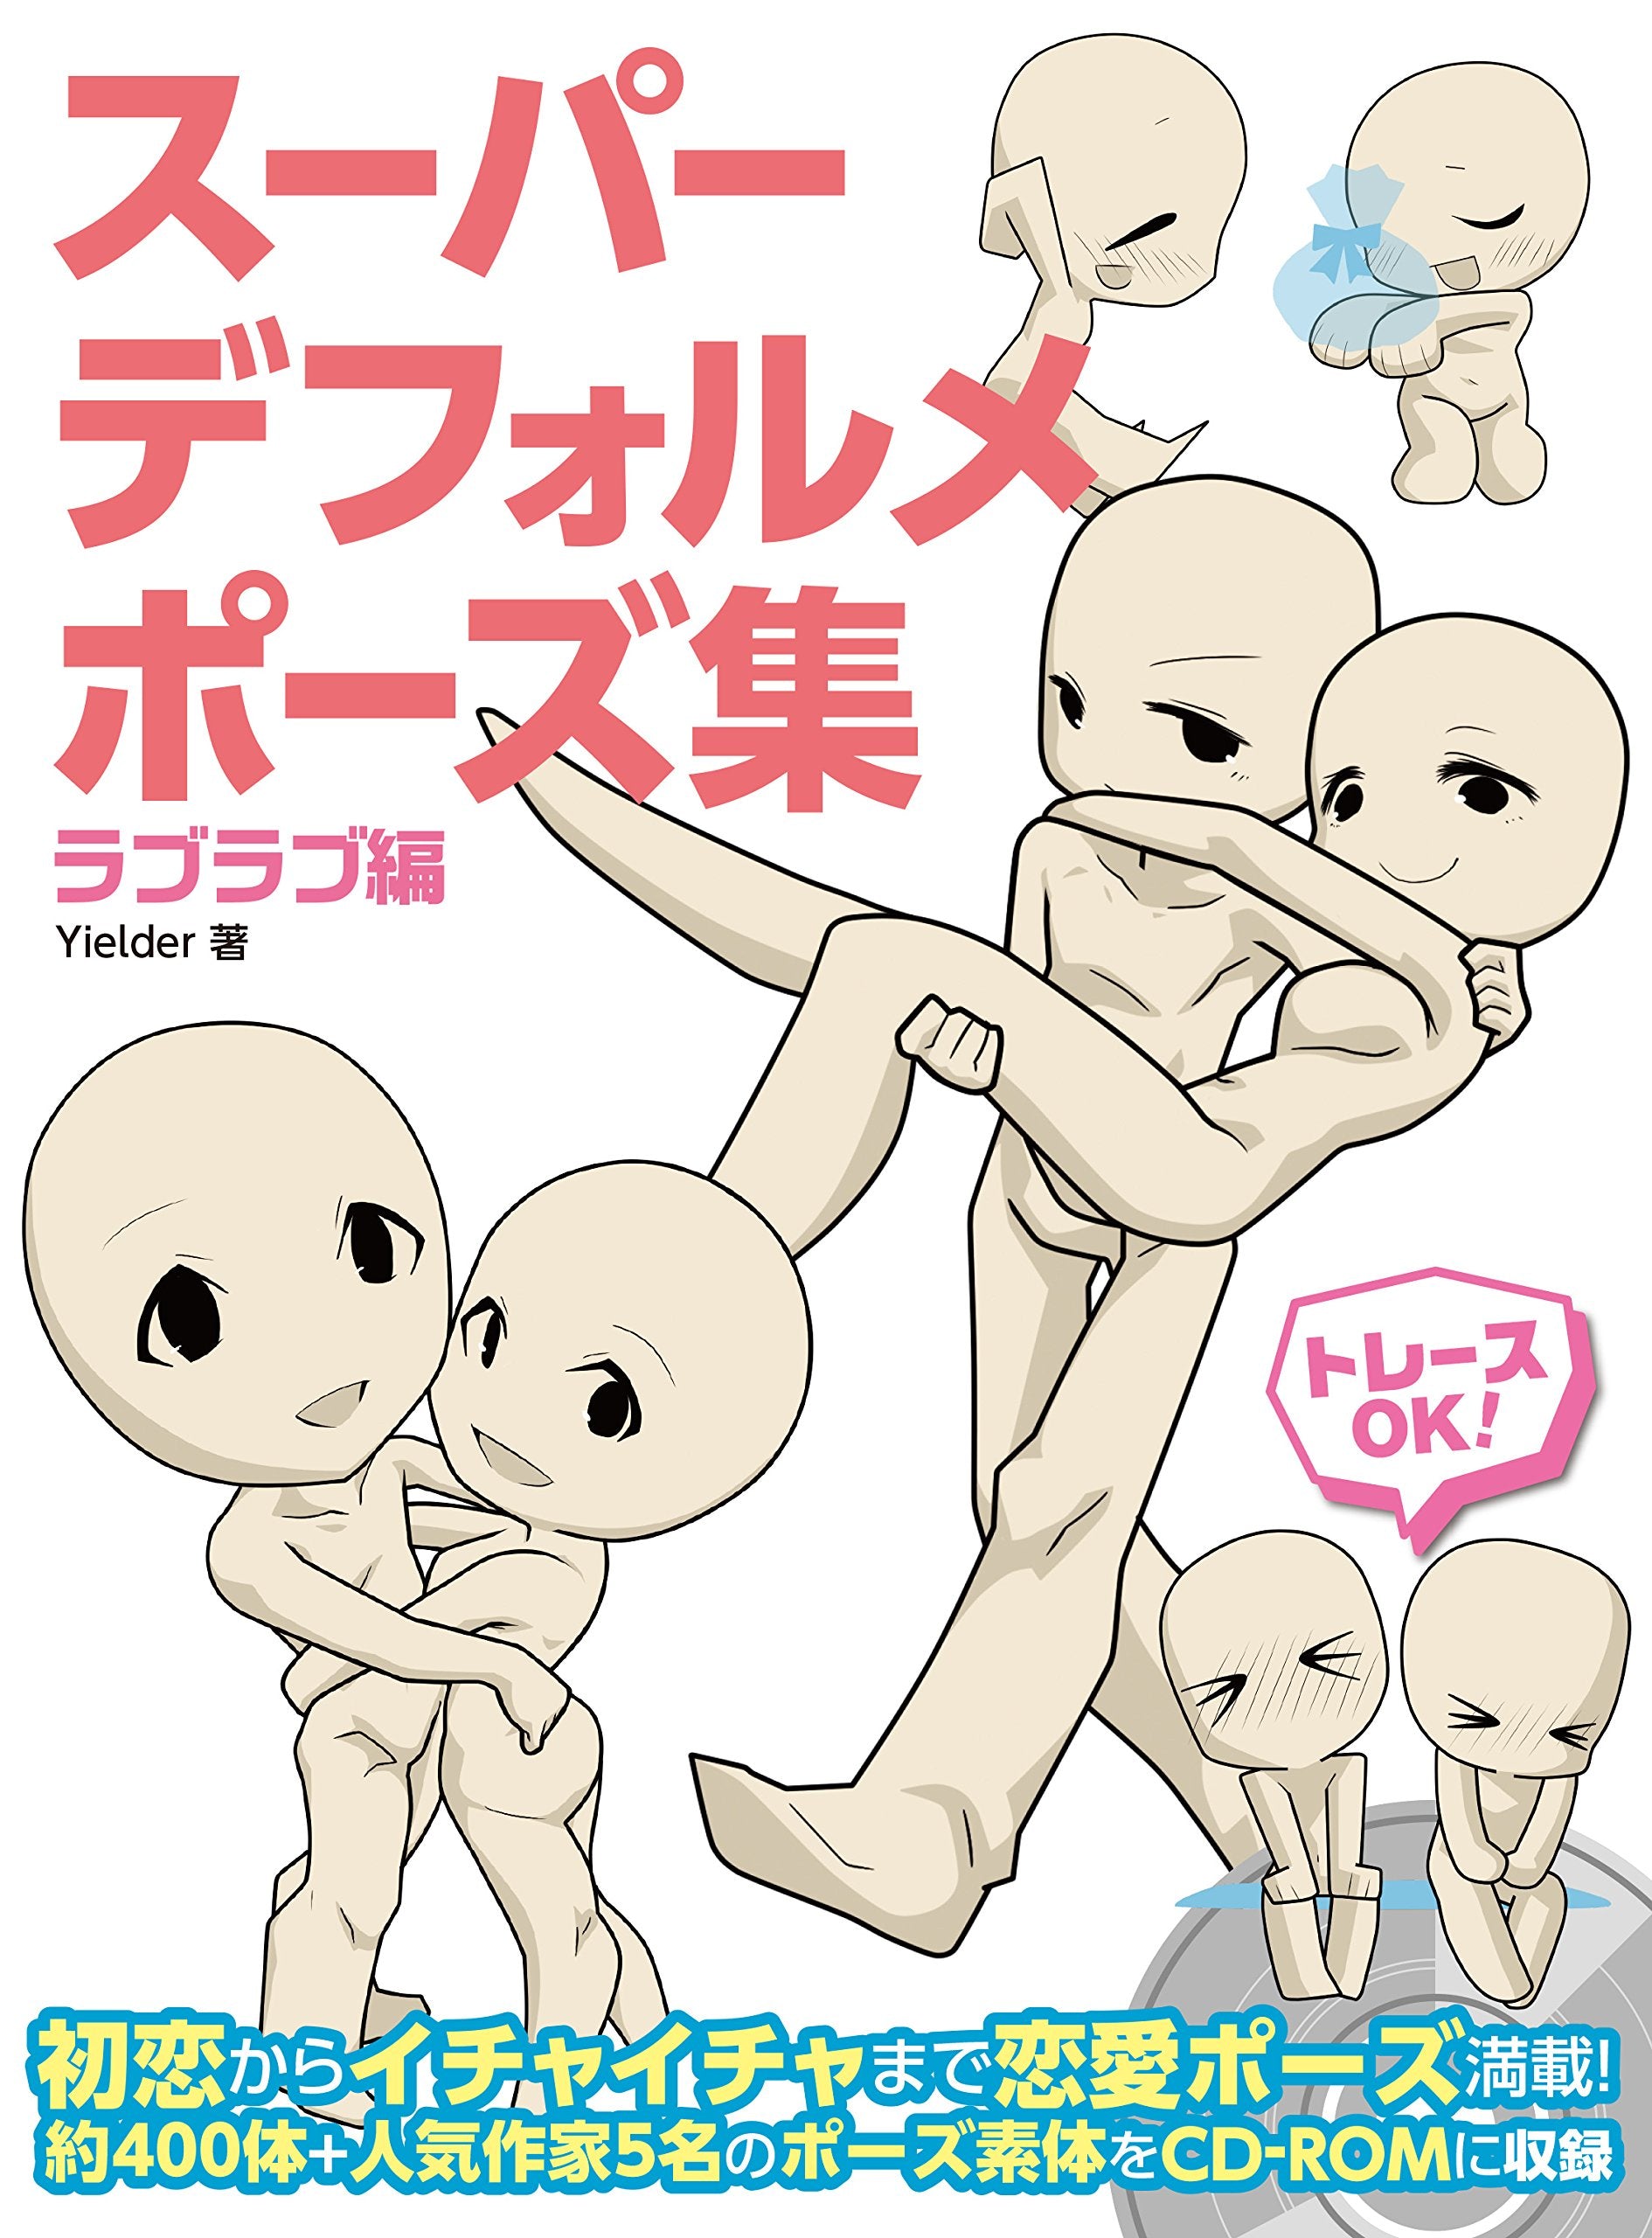 Cute Chibi Pose Reference, Manga Interest: Anime Chibi Couple Poses.